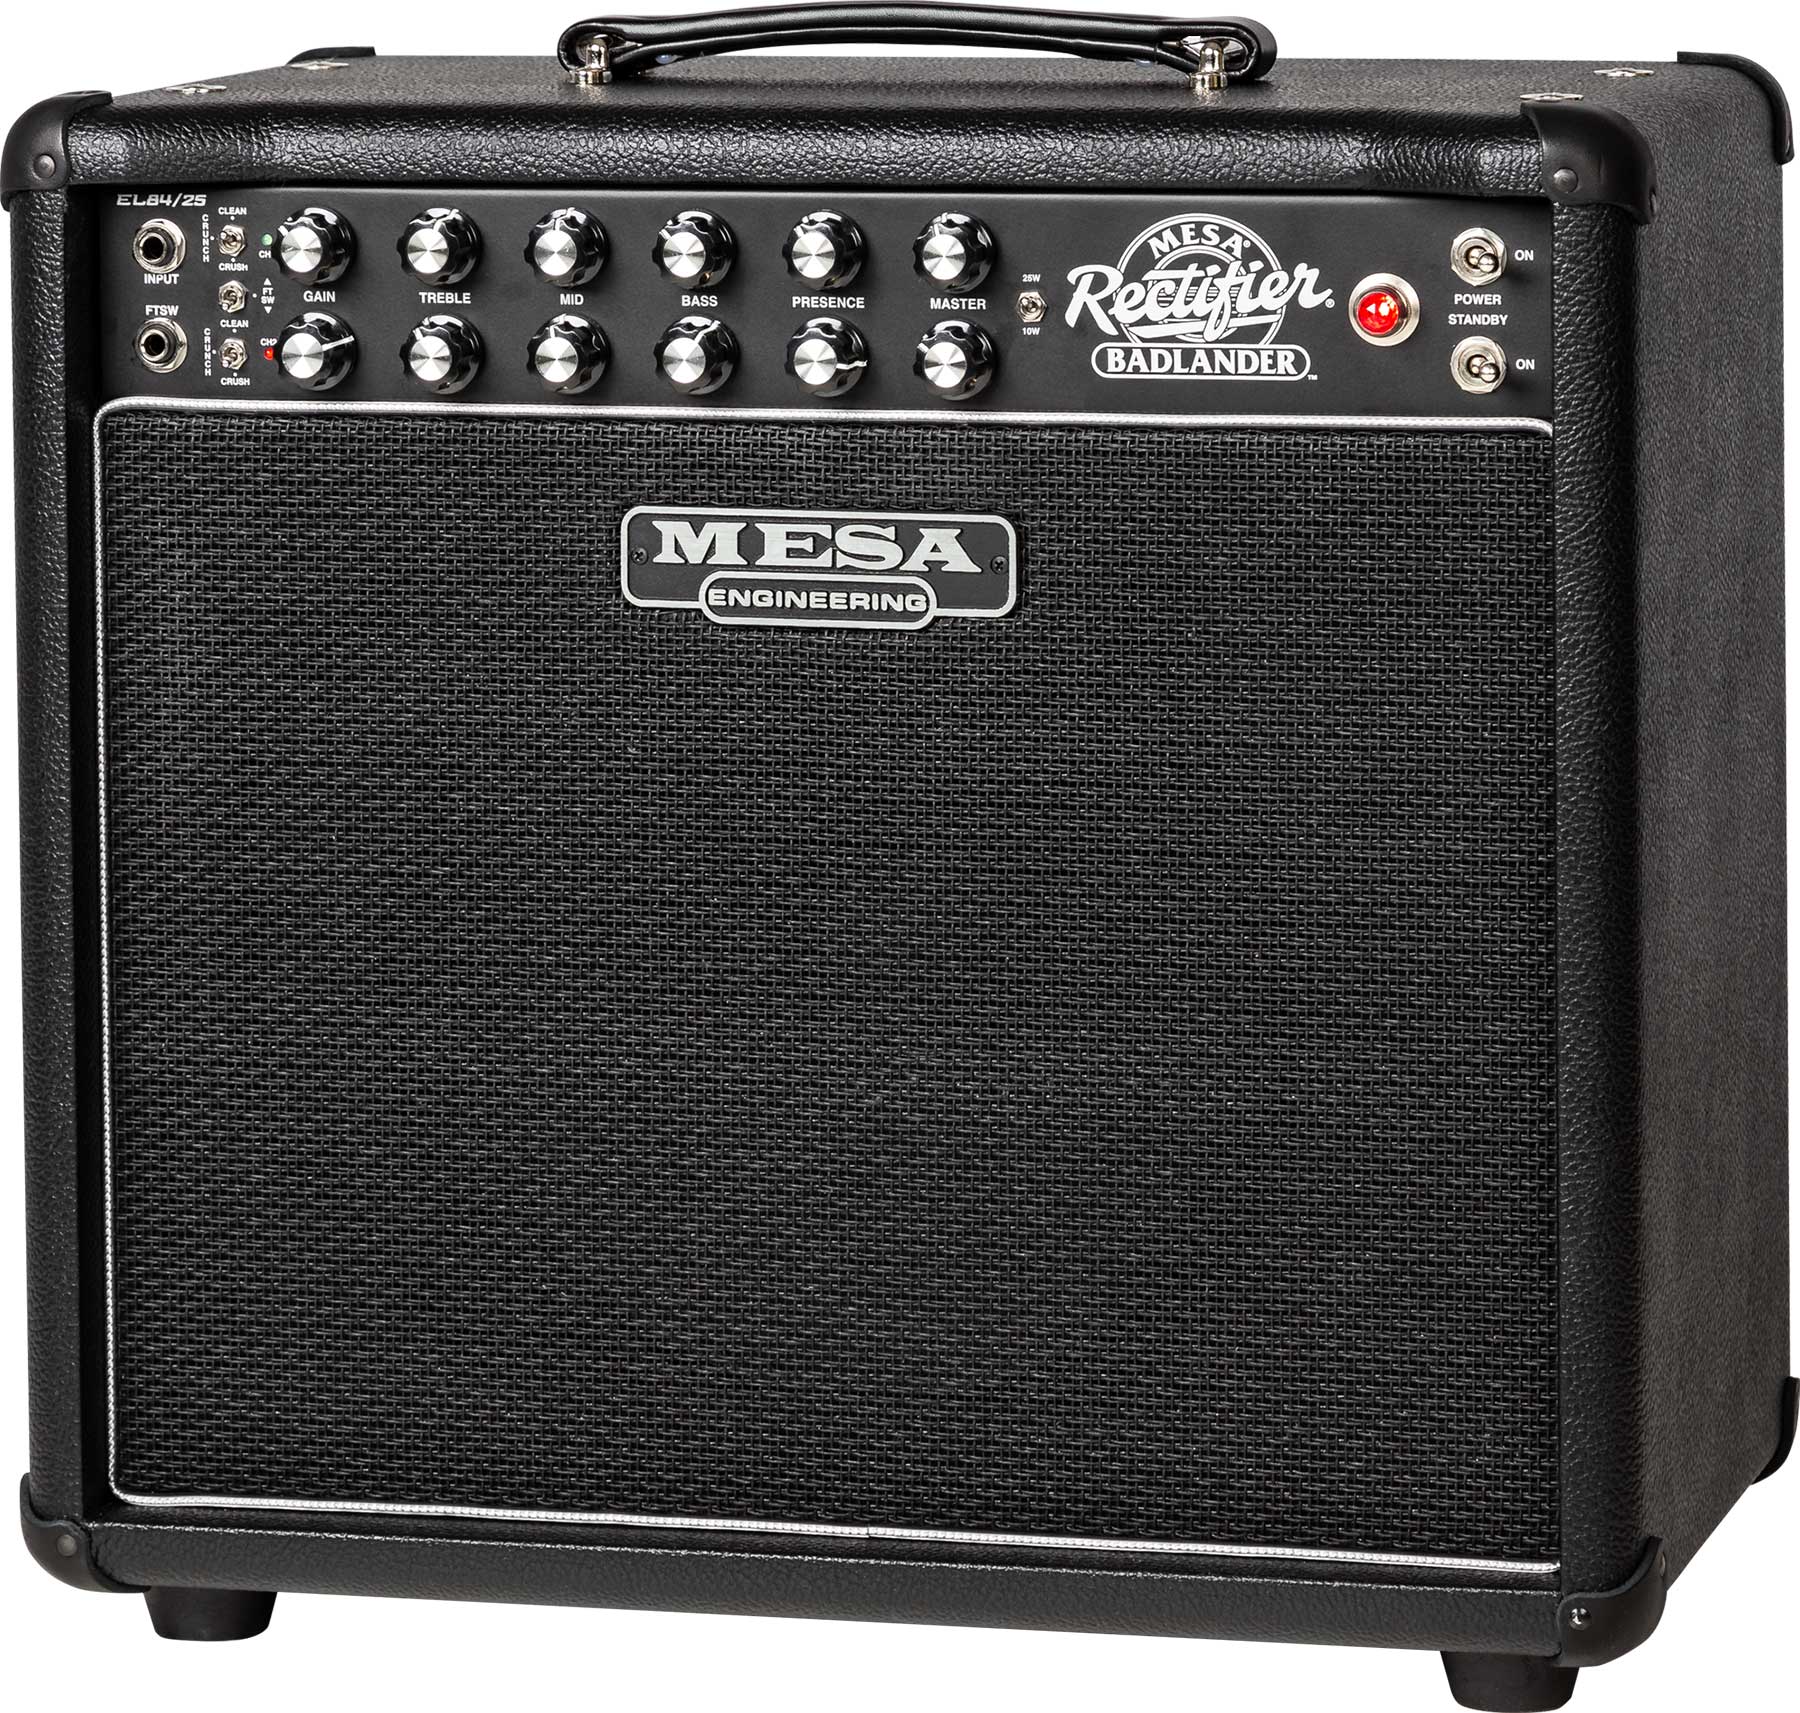 Mesa Boogie Badlander 25 1x12 Combo 10/25w 112 El84 Black Bronco - Electric guitar combo amp - Variation 1